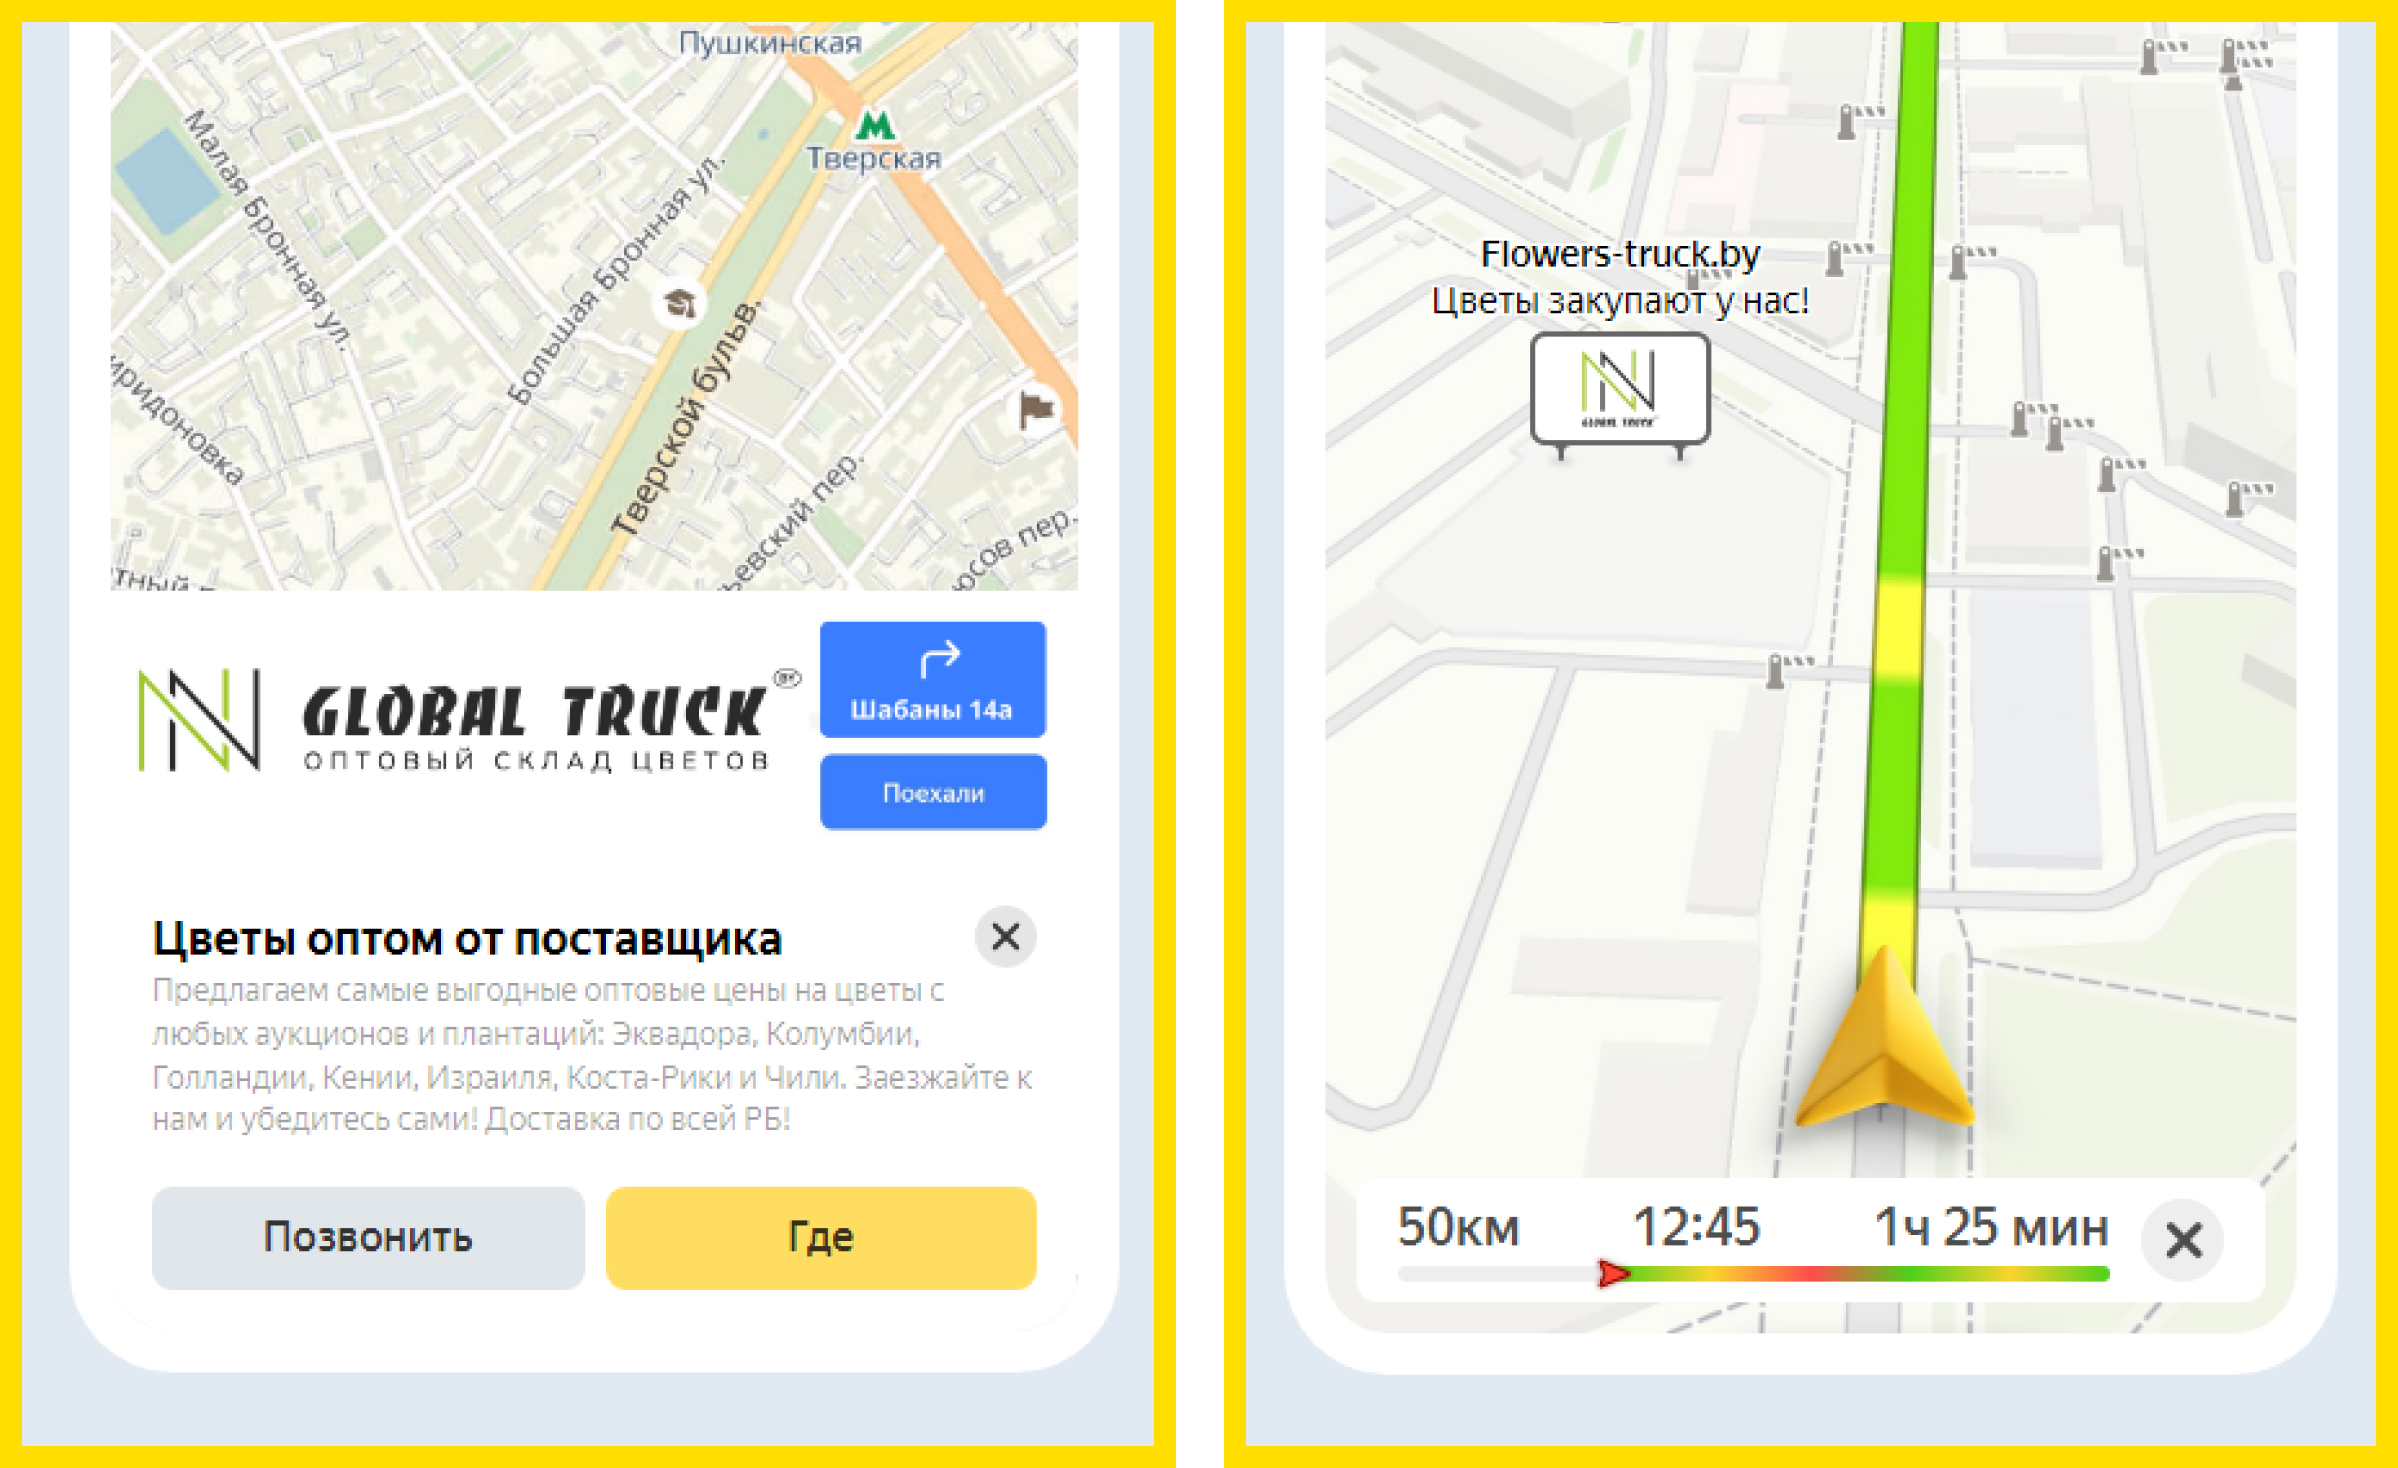 Пример объявлений в Яндекс.Картах, Яндекс.Бизнес, Яндекс.Навигатор